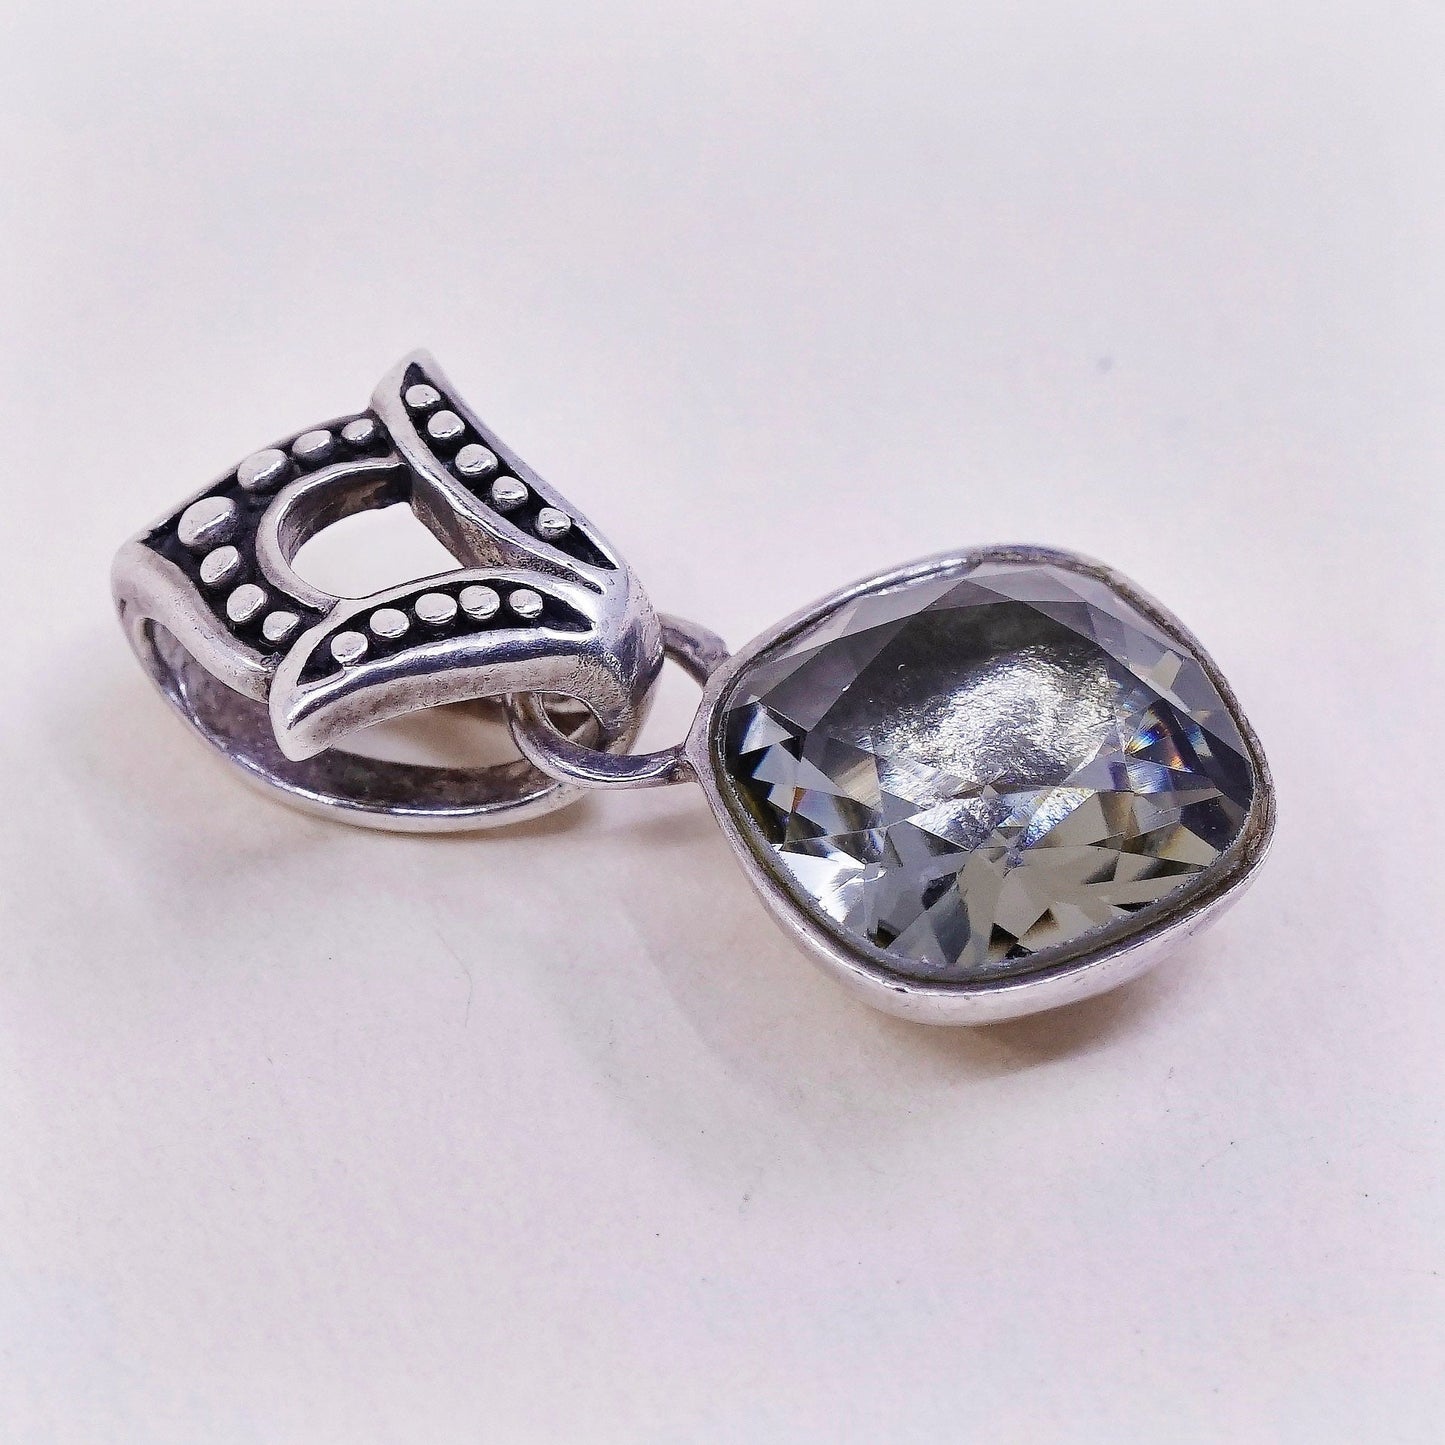 VTG Barse sterling silver handmade pendant, 925 with cushion cut topaz pendant